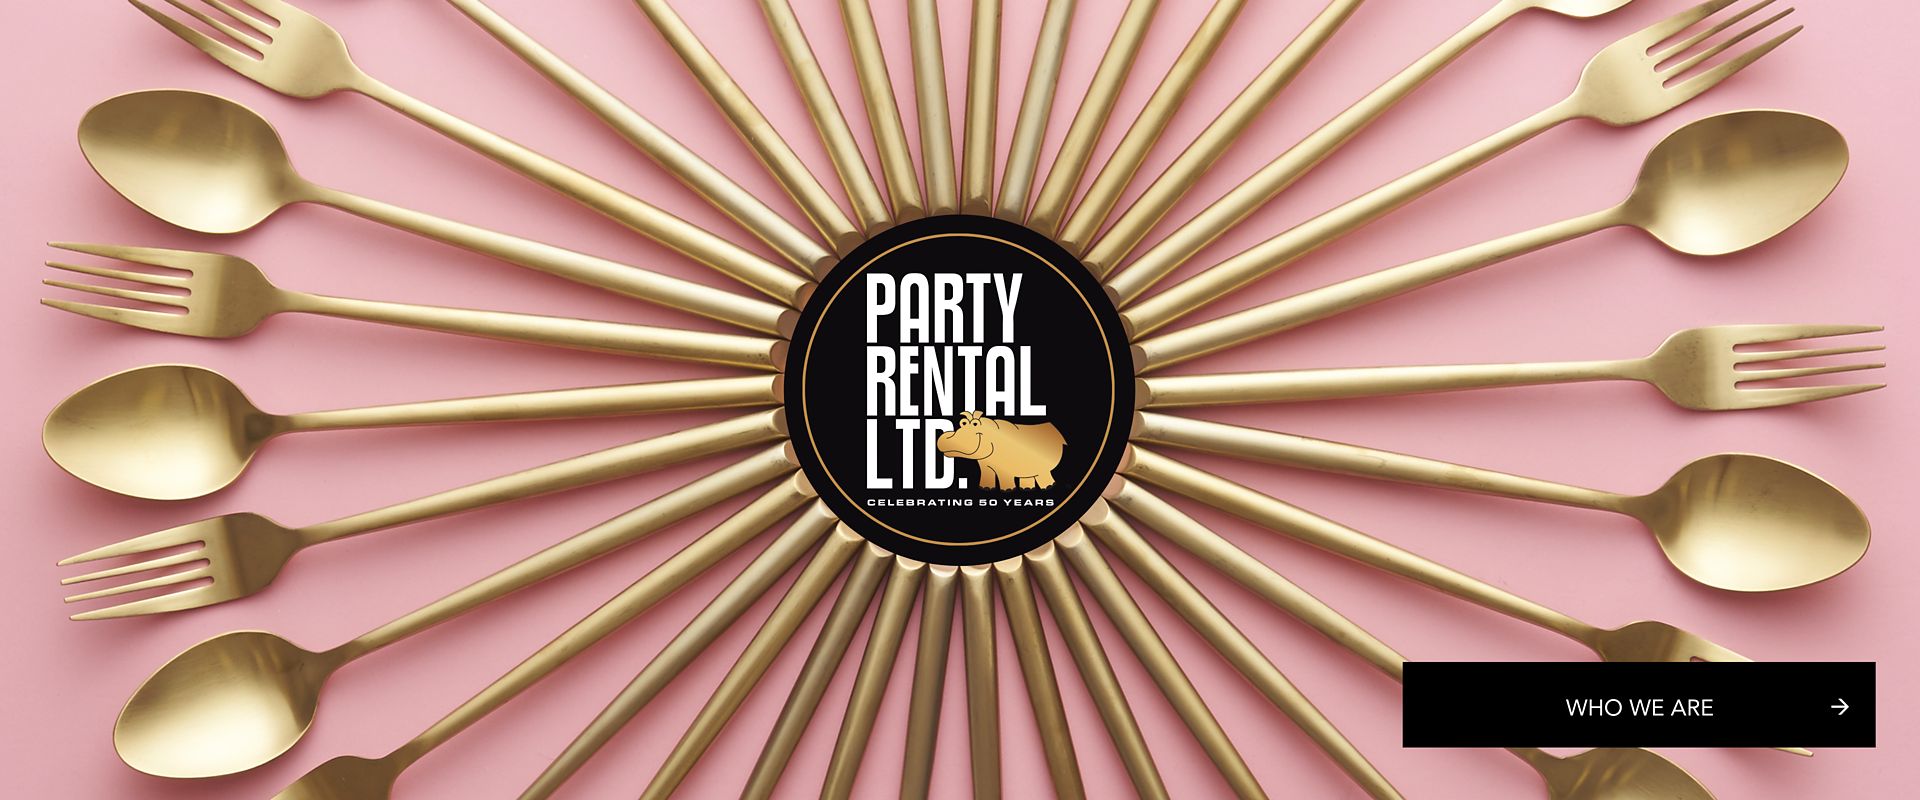 Party Rental Ltd.